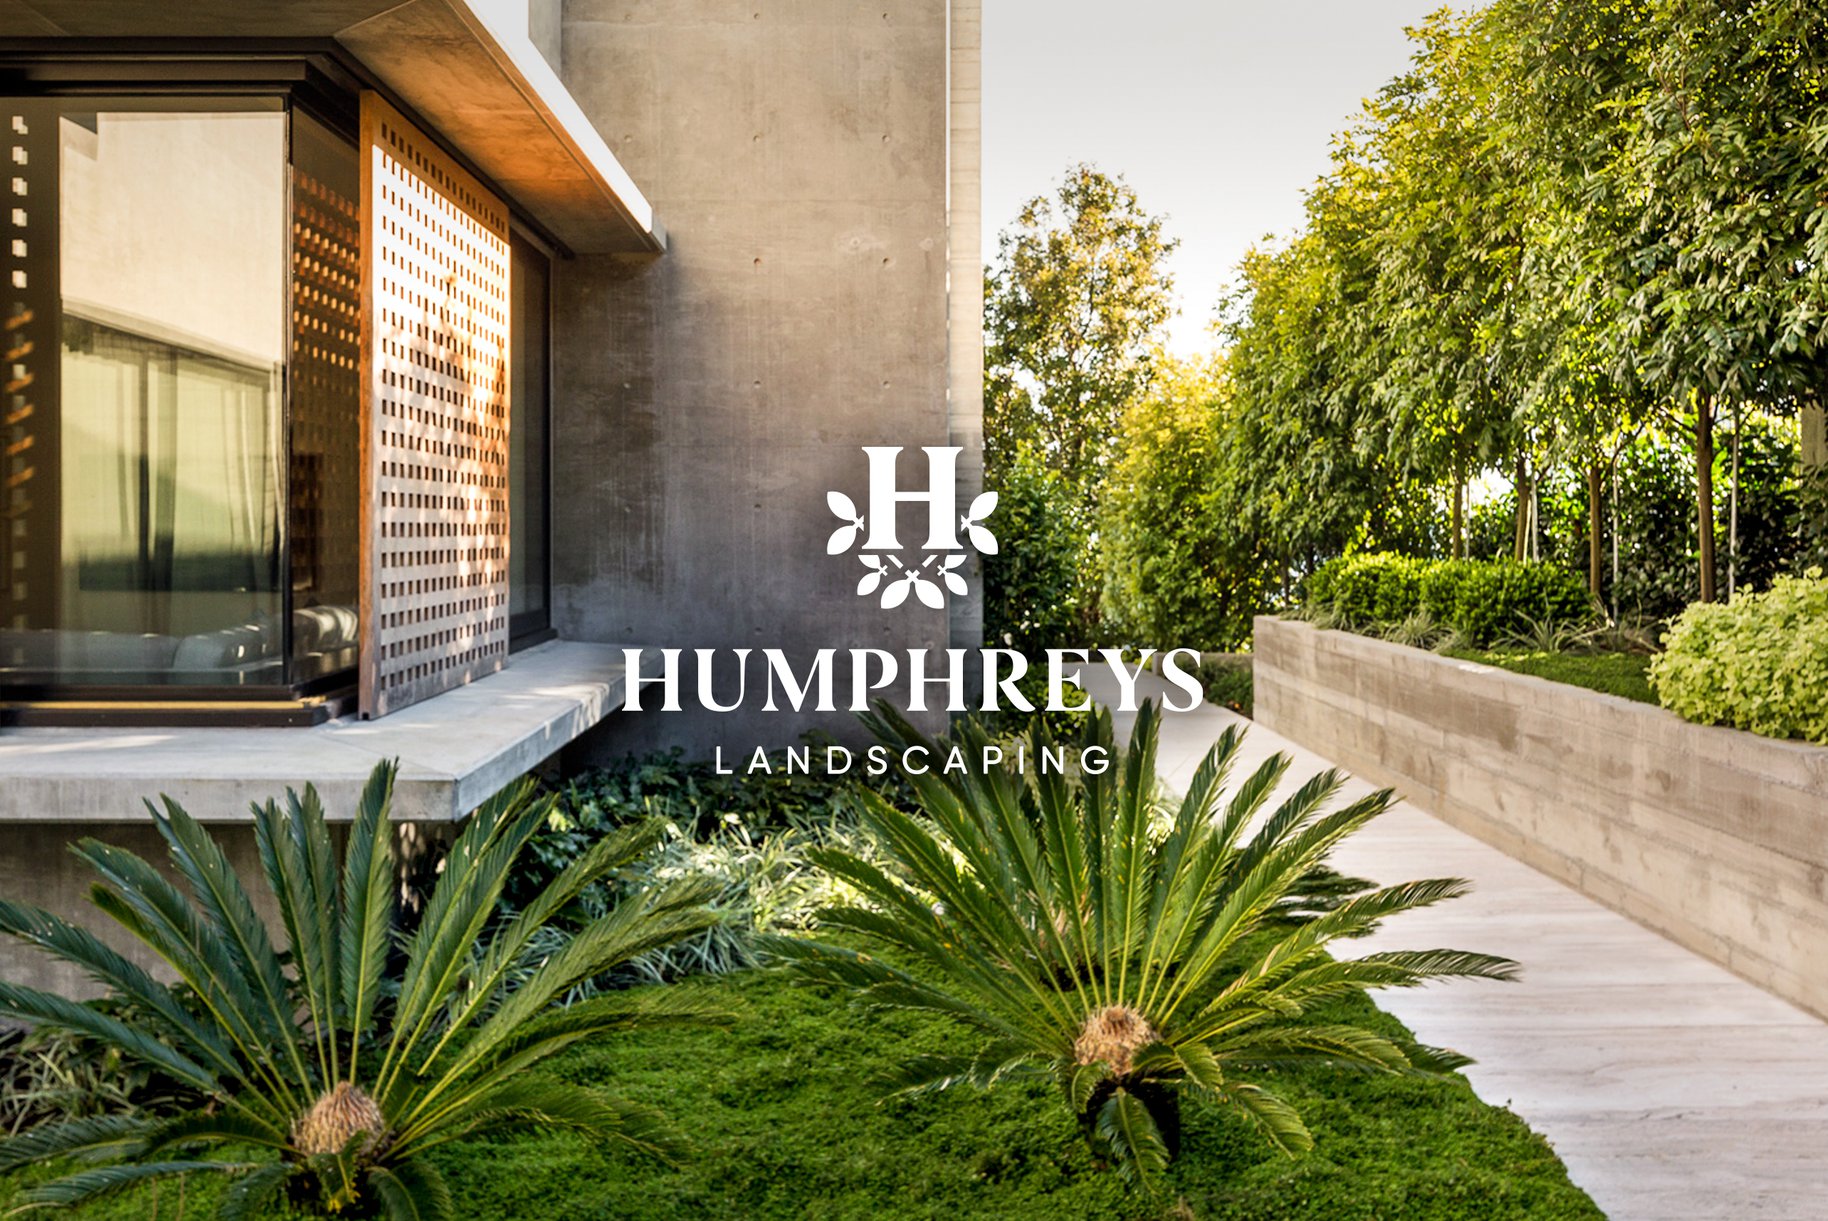 Humphreys Landscaping image